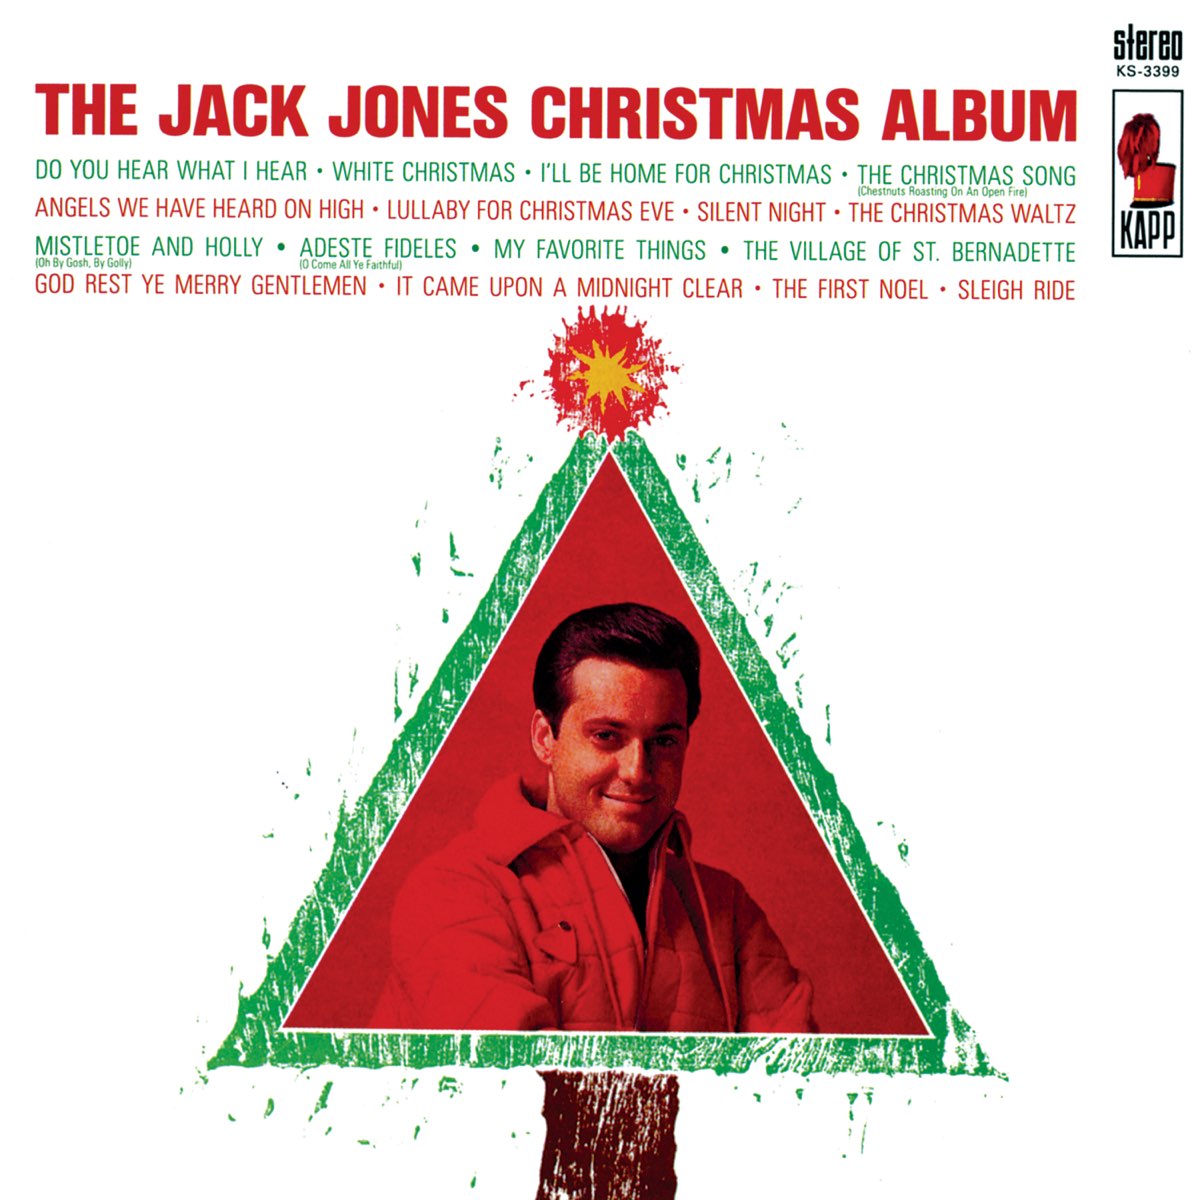 The Jack Jones Christmas Album - Album by Jack Jones - Apple Music